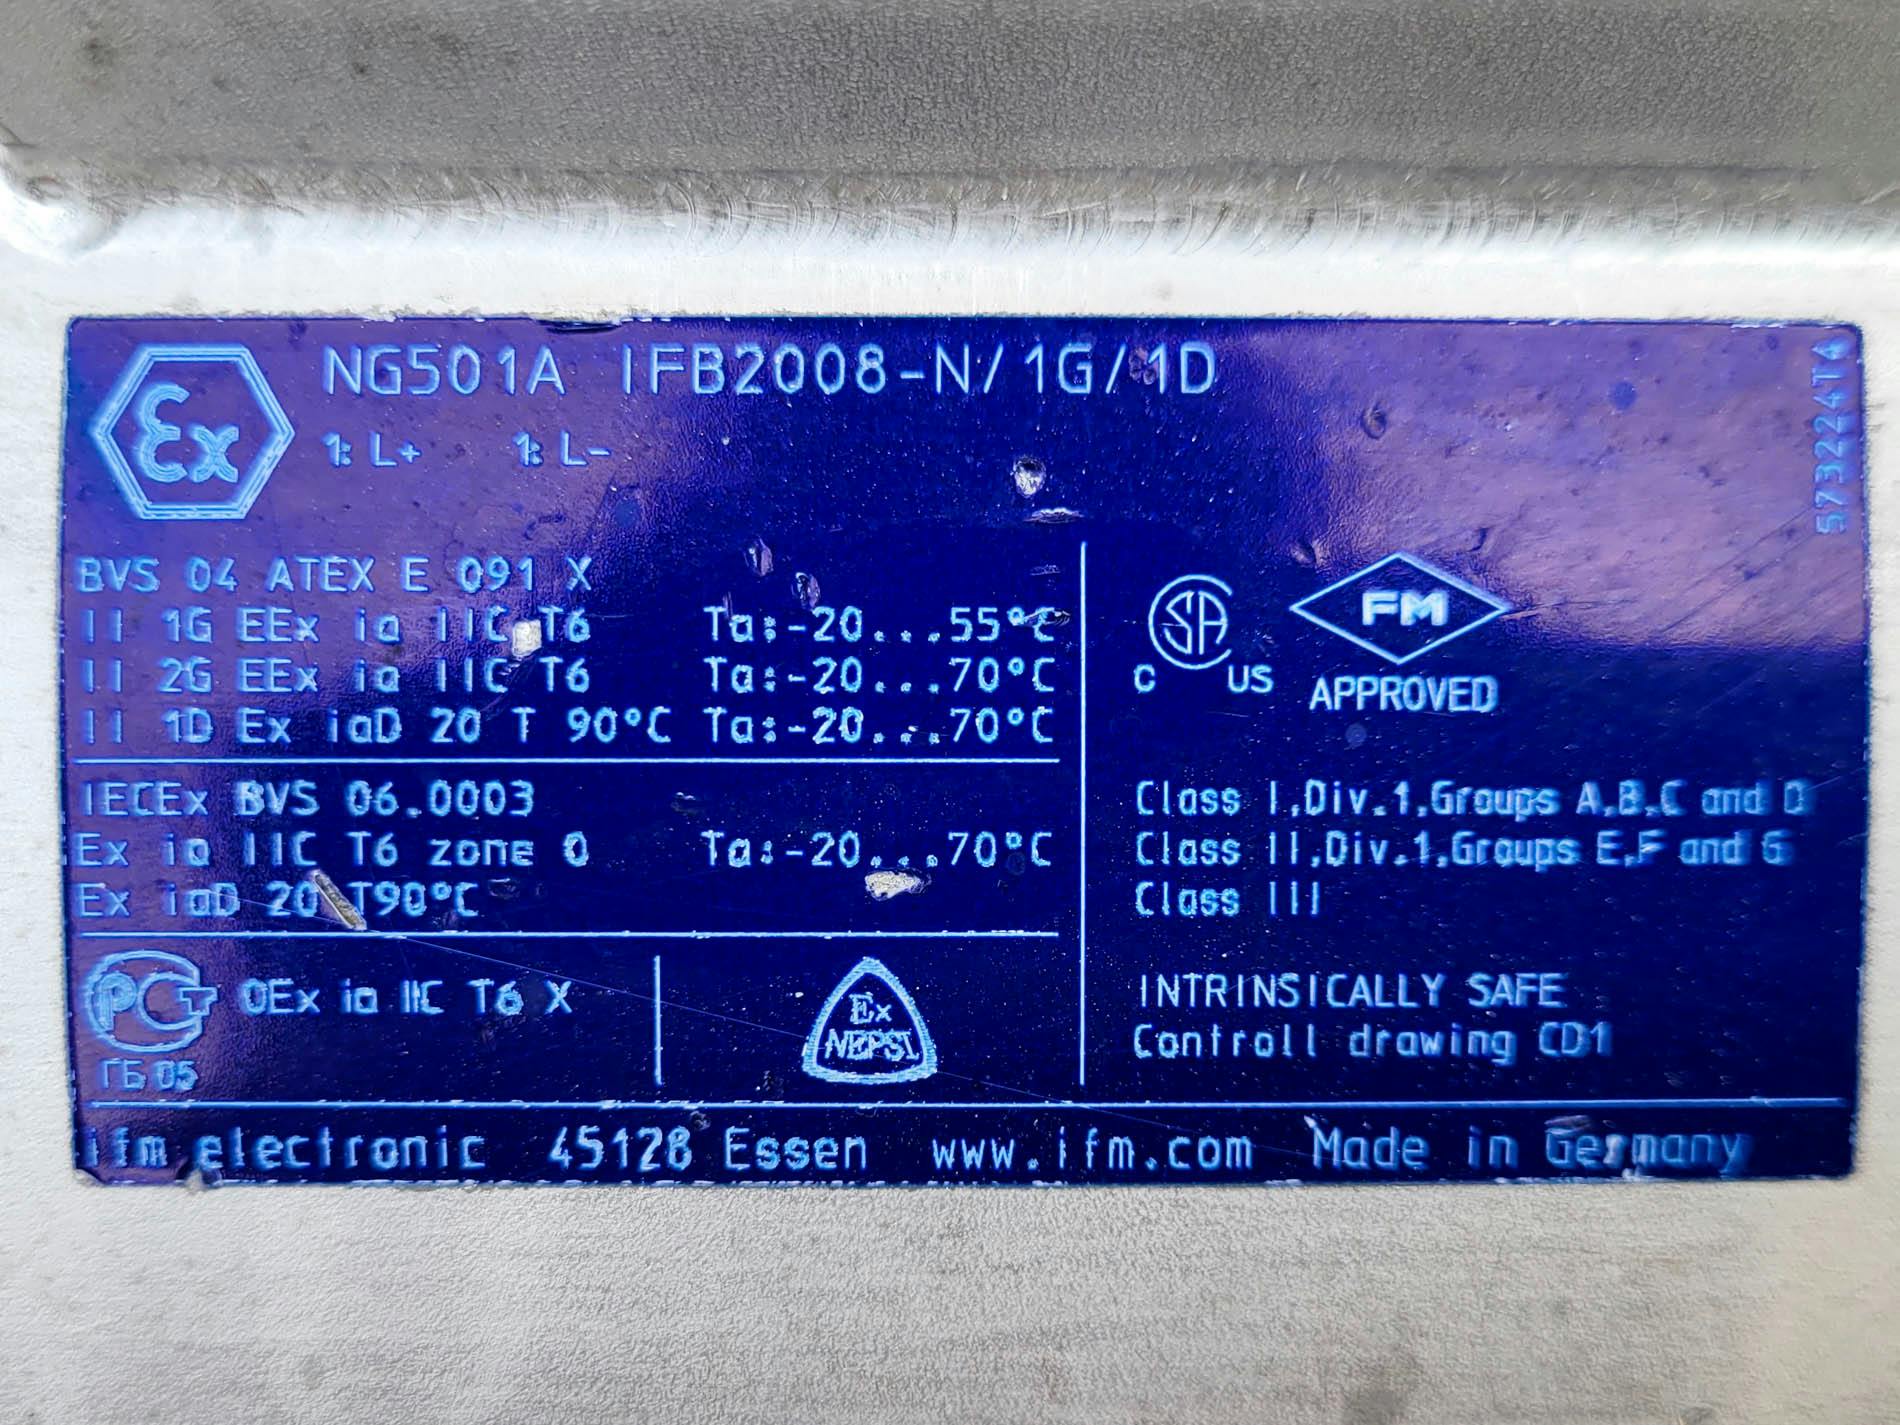 Emde Nassau RSK-250x8200 TL "cooling screw" - Transportador helicoidal horizontal - image 9